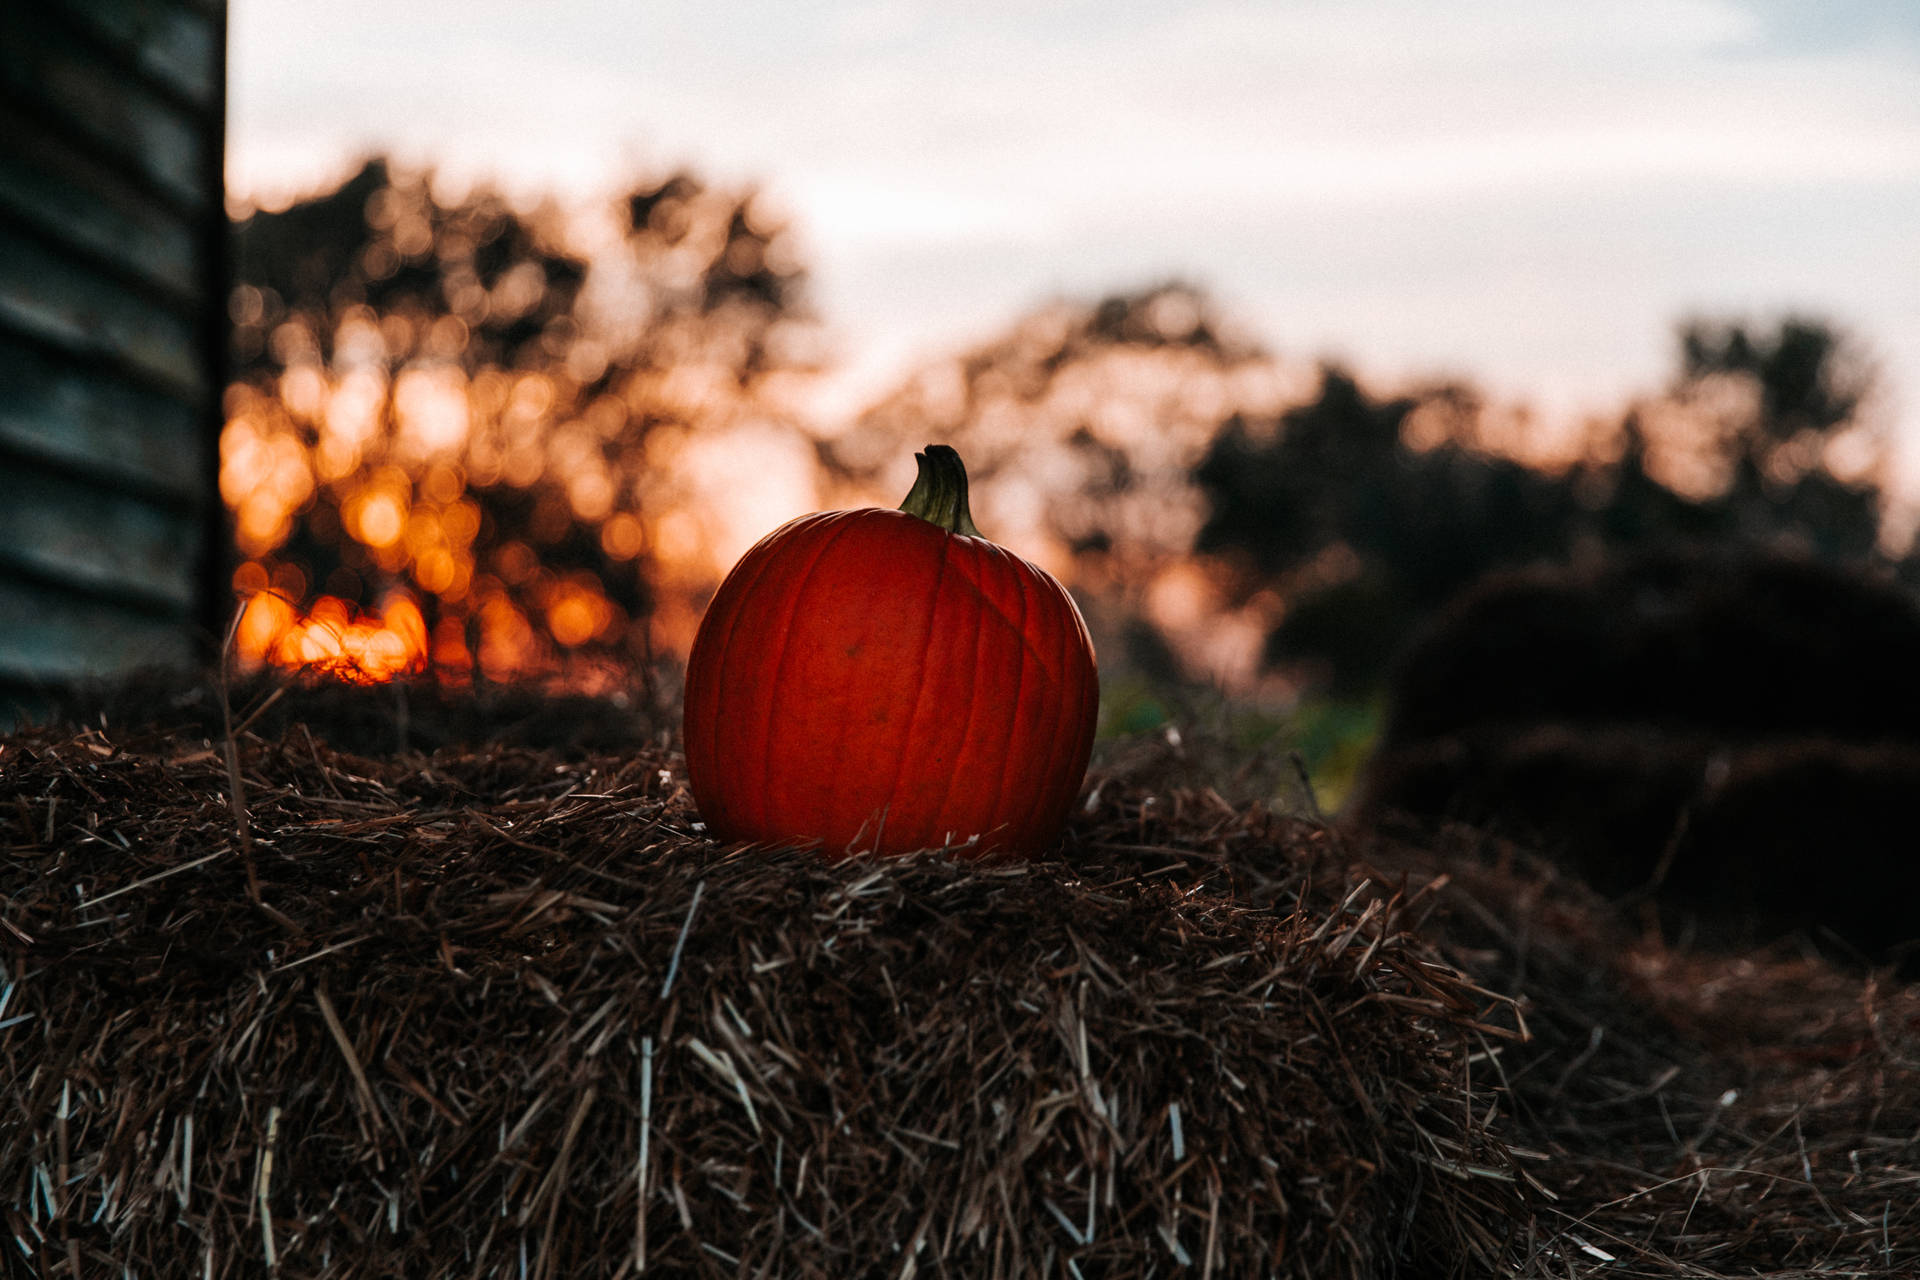 Pumpkins nestled in hay provide an idyllic autumnal display. Wallpaper